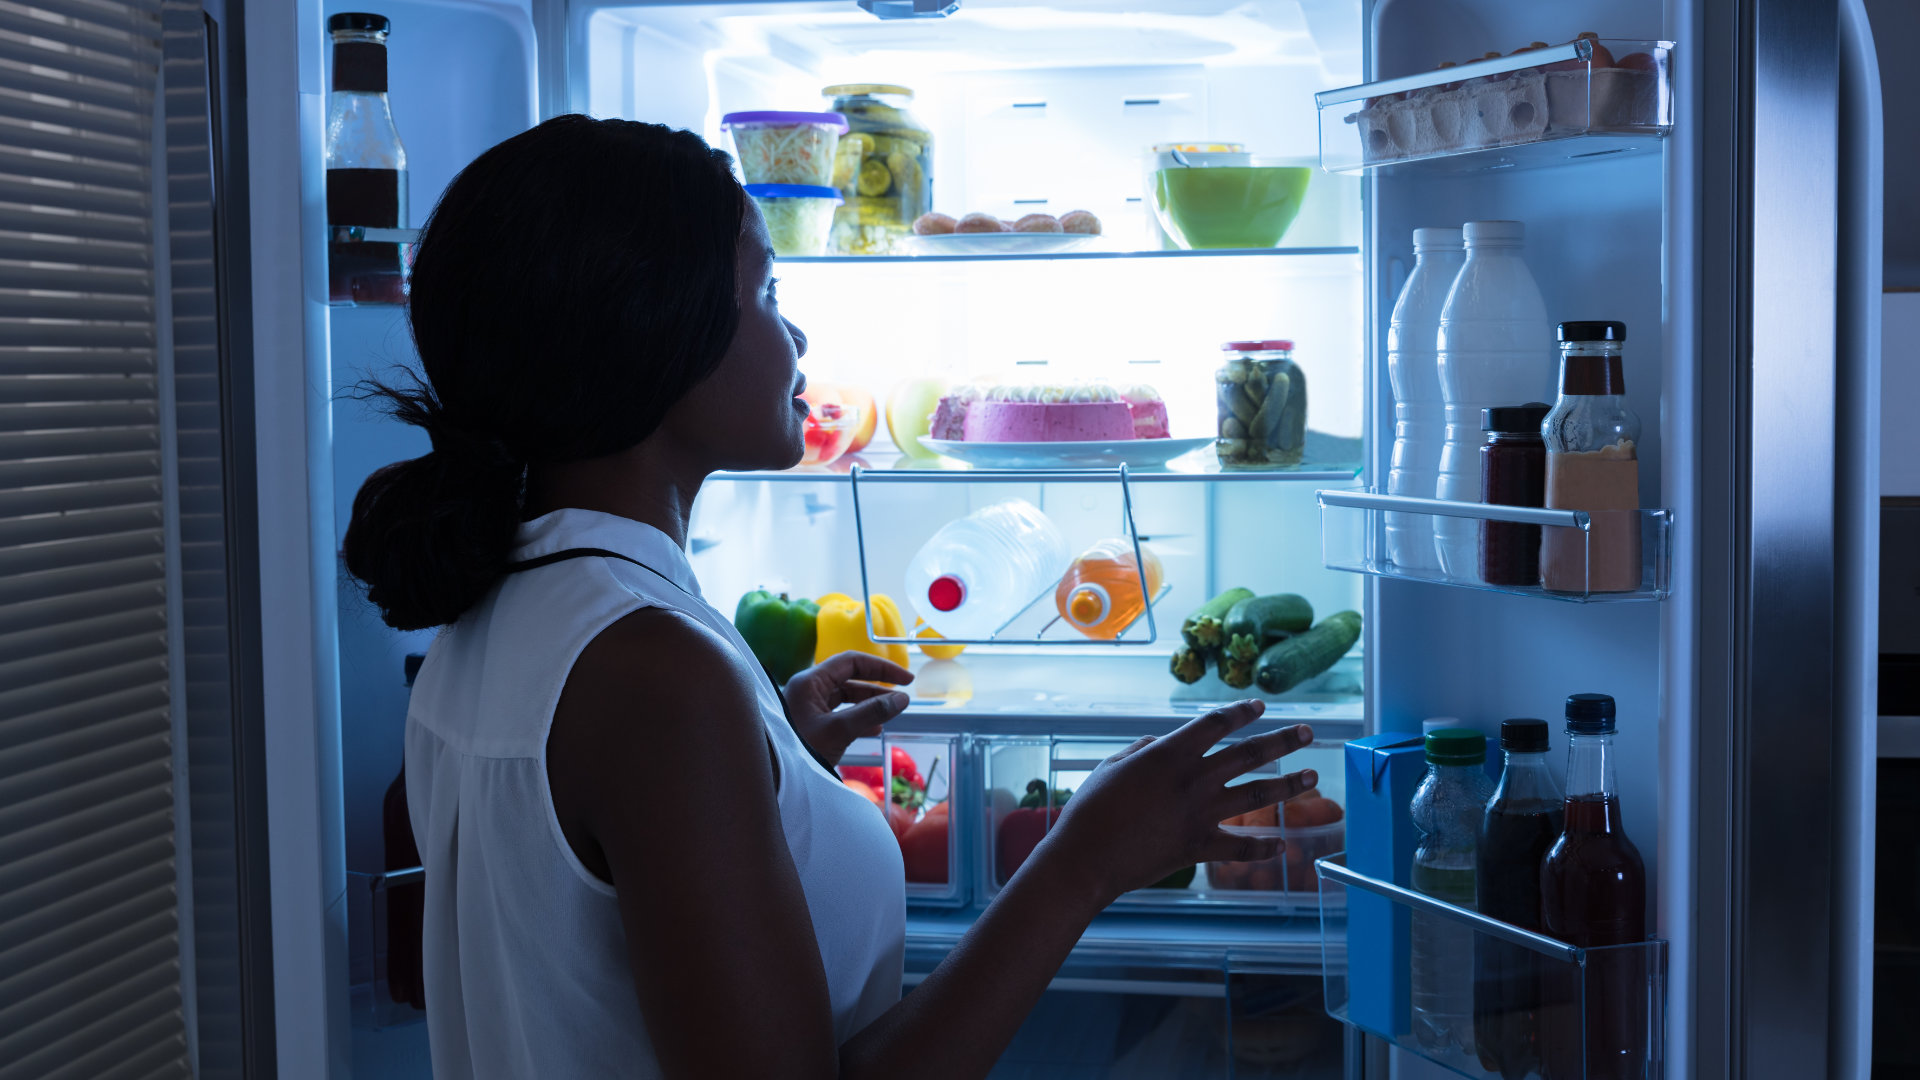 Featured image for “How To Fix A Frigidaire Refrigerator Error Code H1”